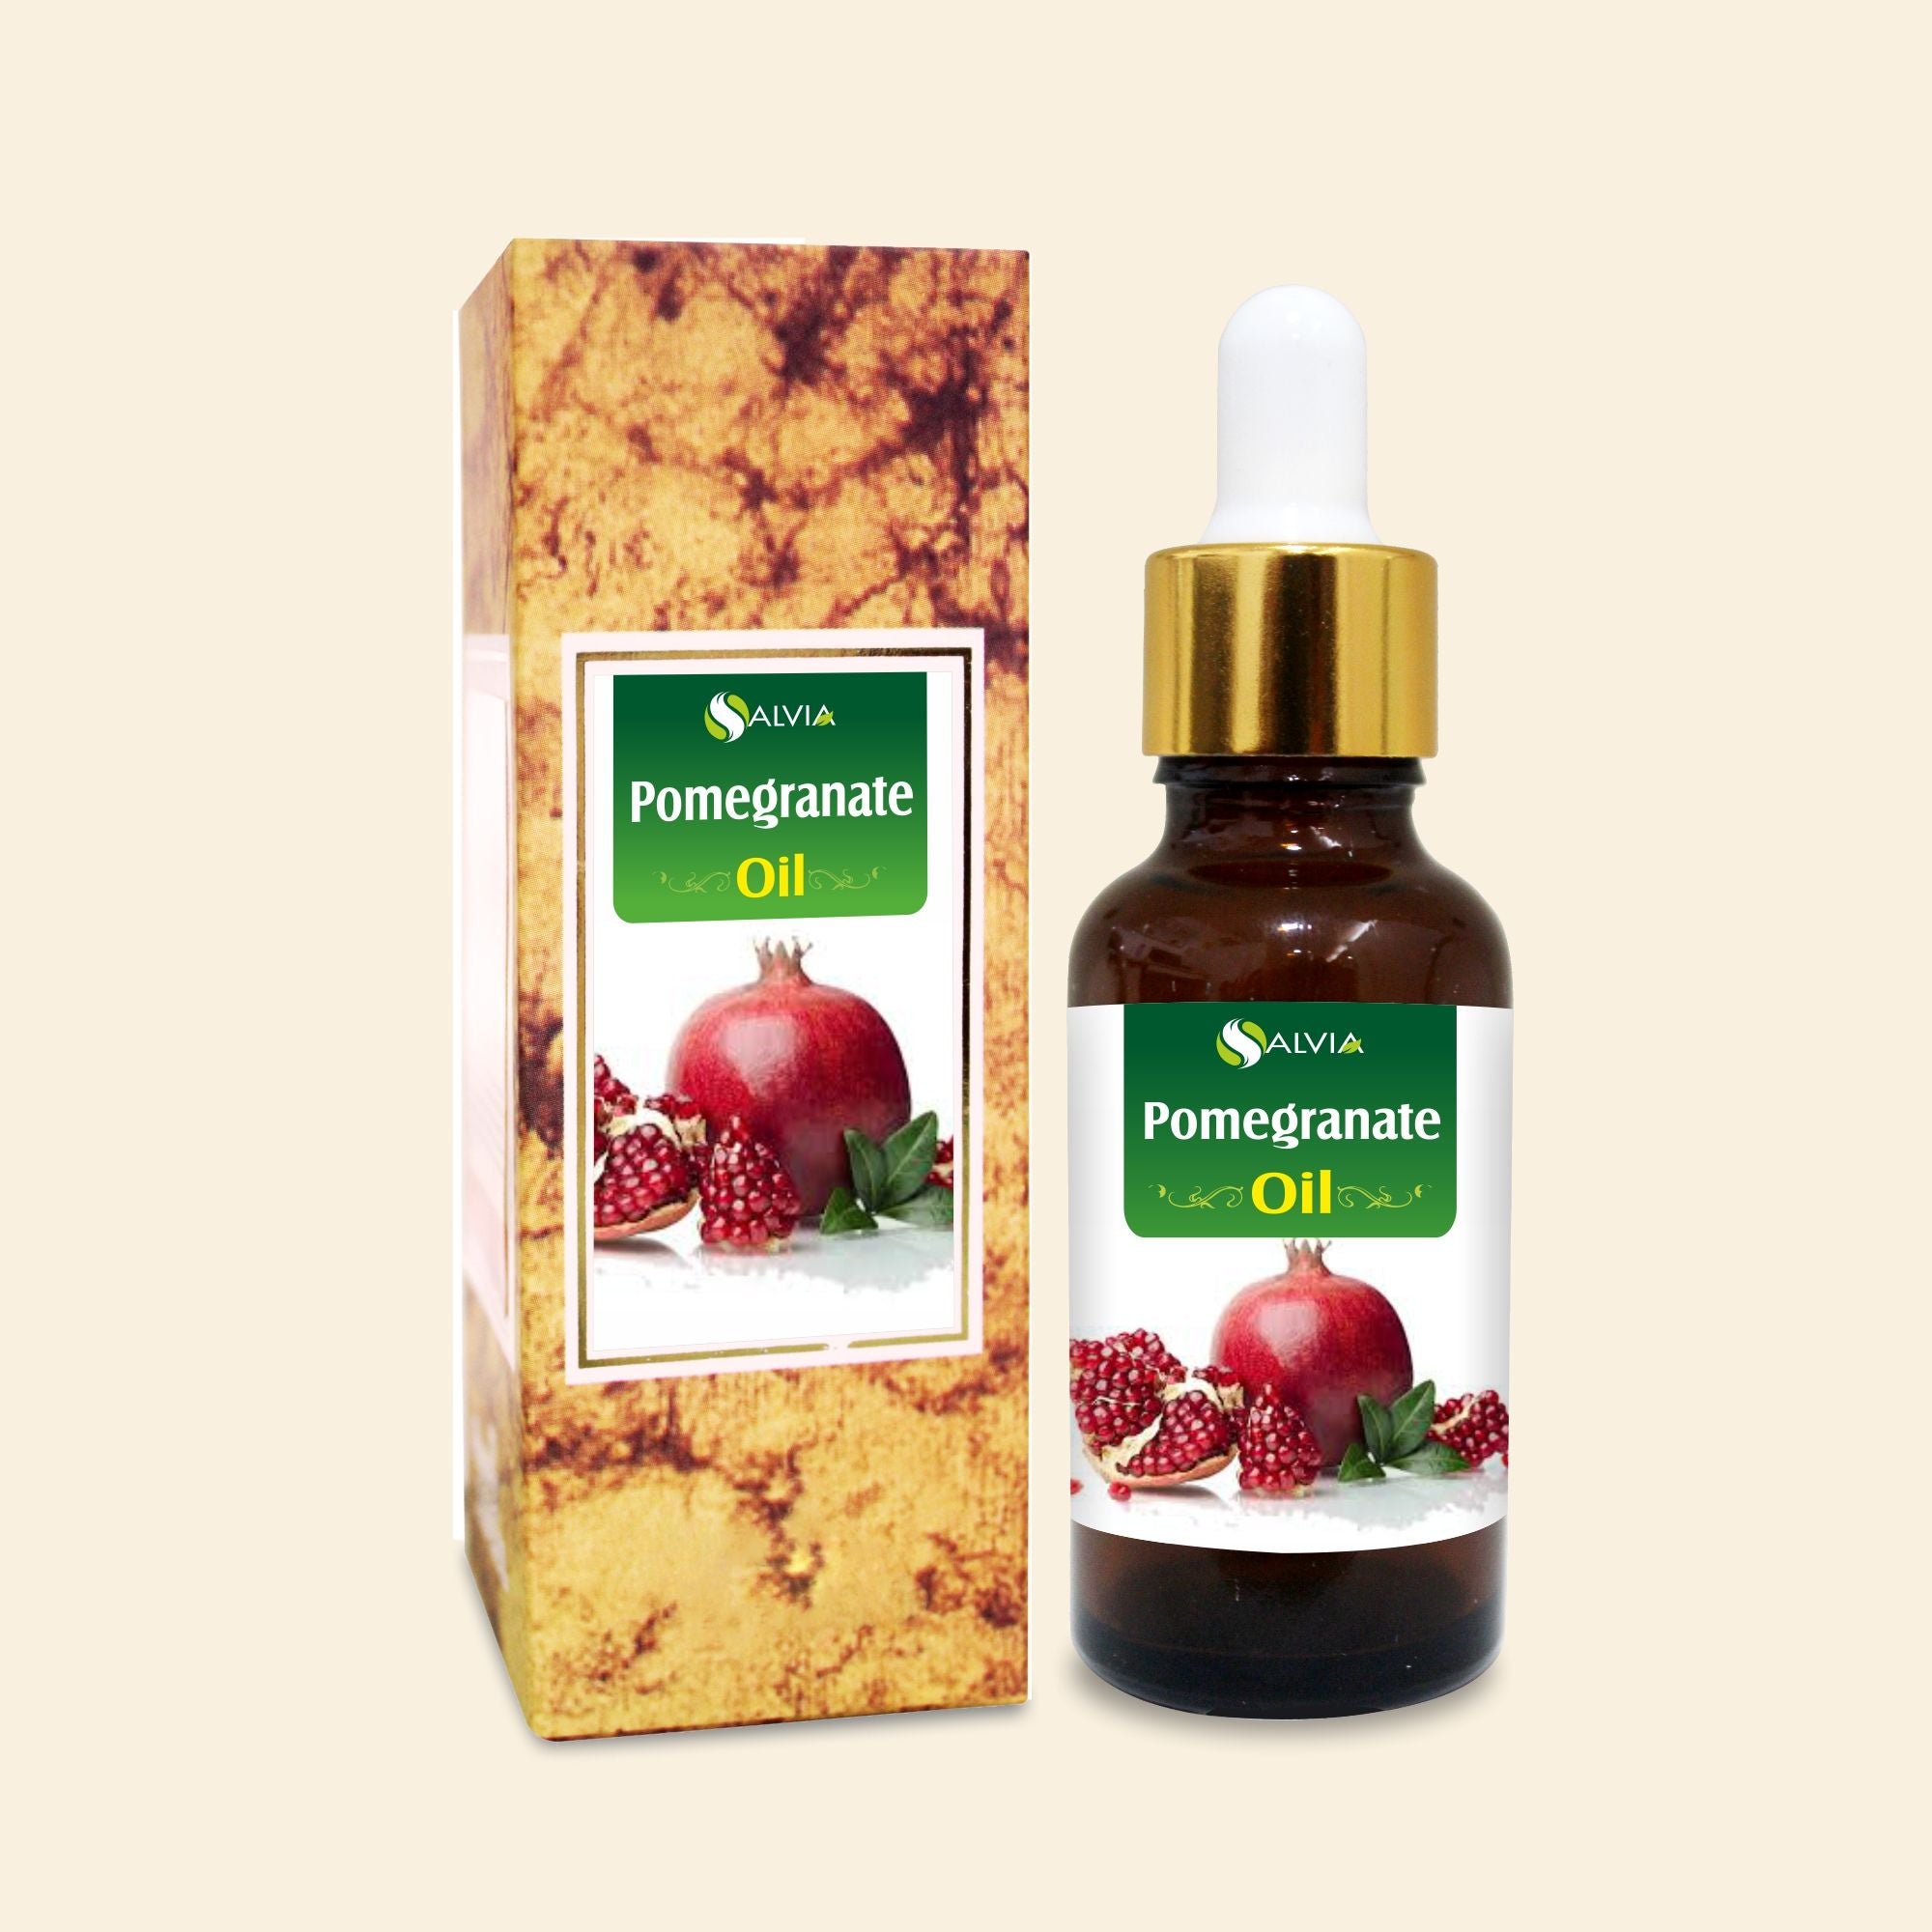 Salvia Natural Carrier Oils Pomegranate Oil